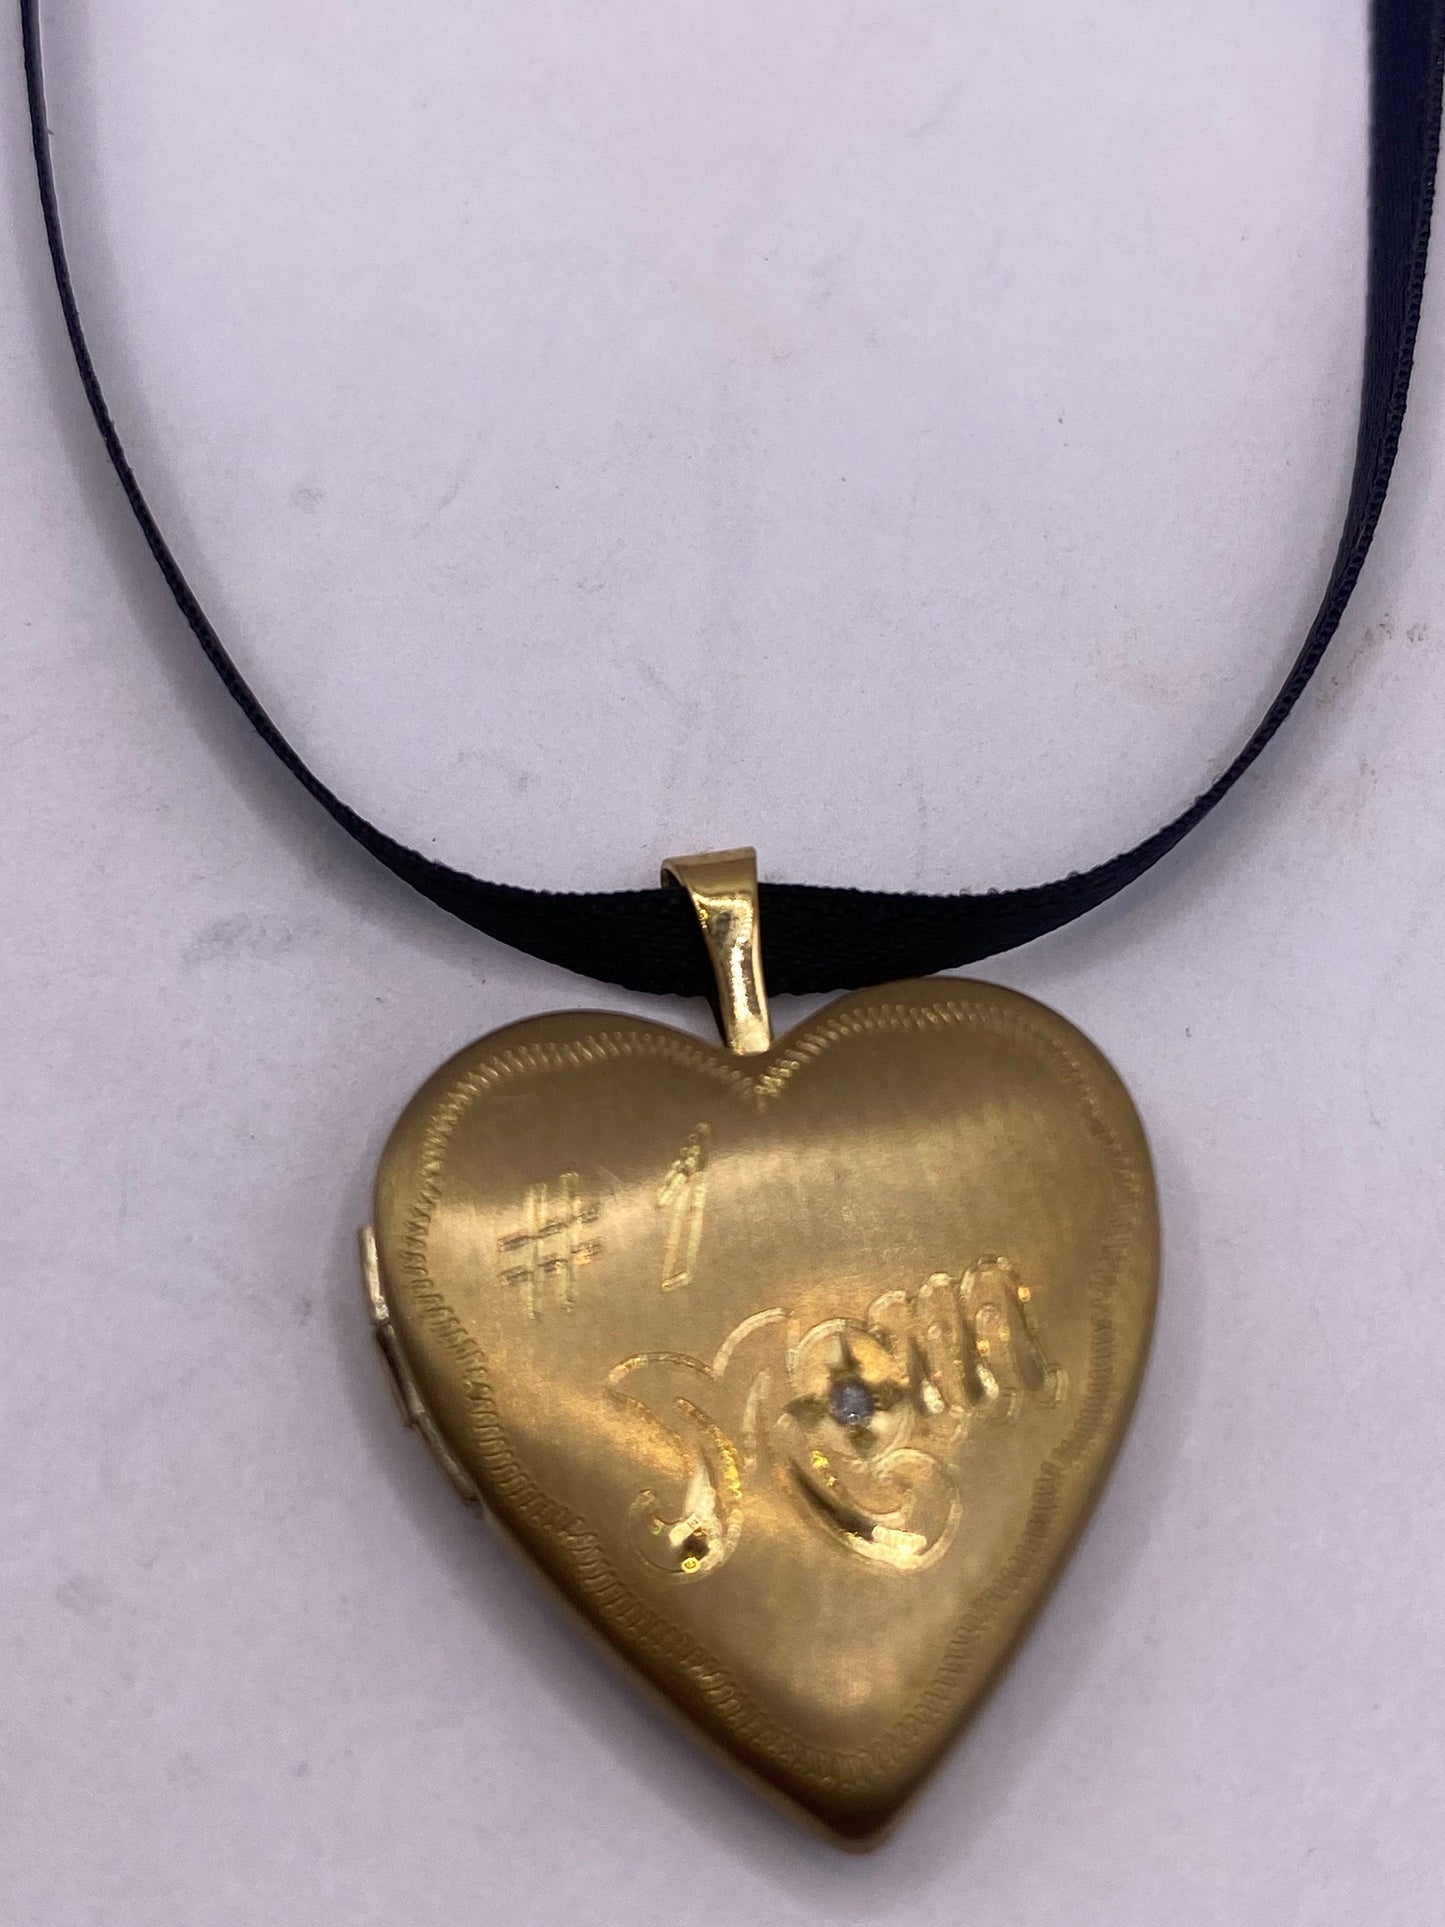 Vintage Gold Locket | Tiny Heart 9k Gold Filled Pendant Photo Memory Charm Engraved #1 Mom | Choker Necklace